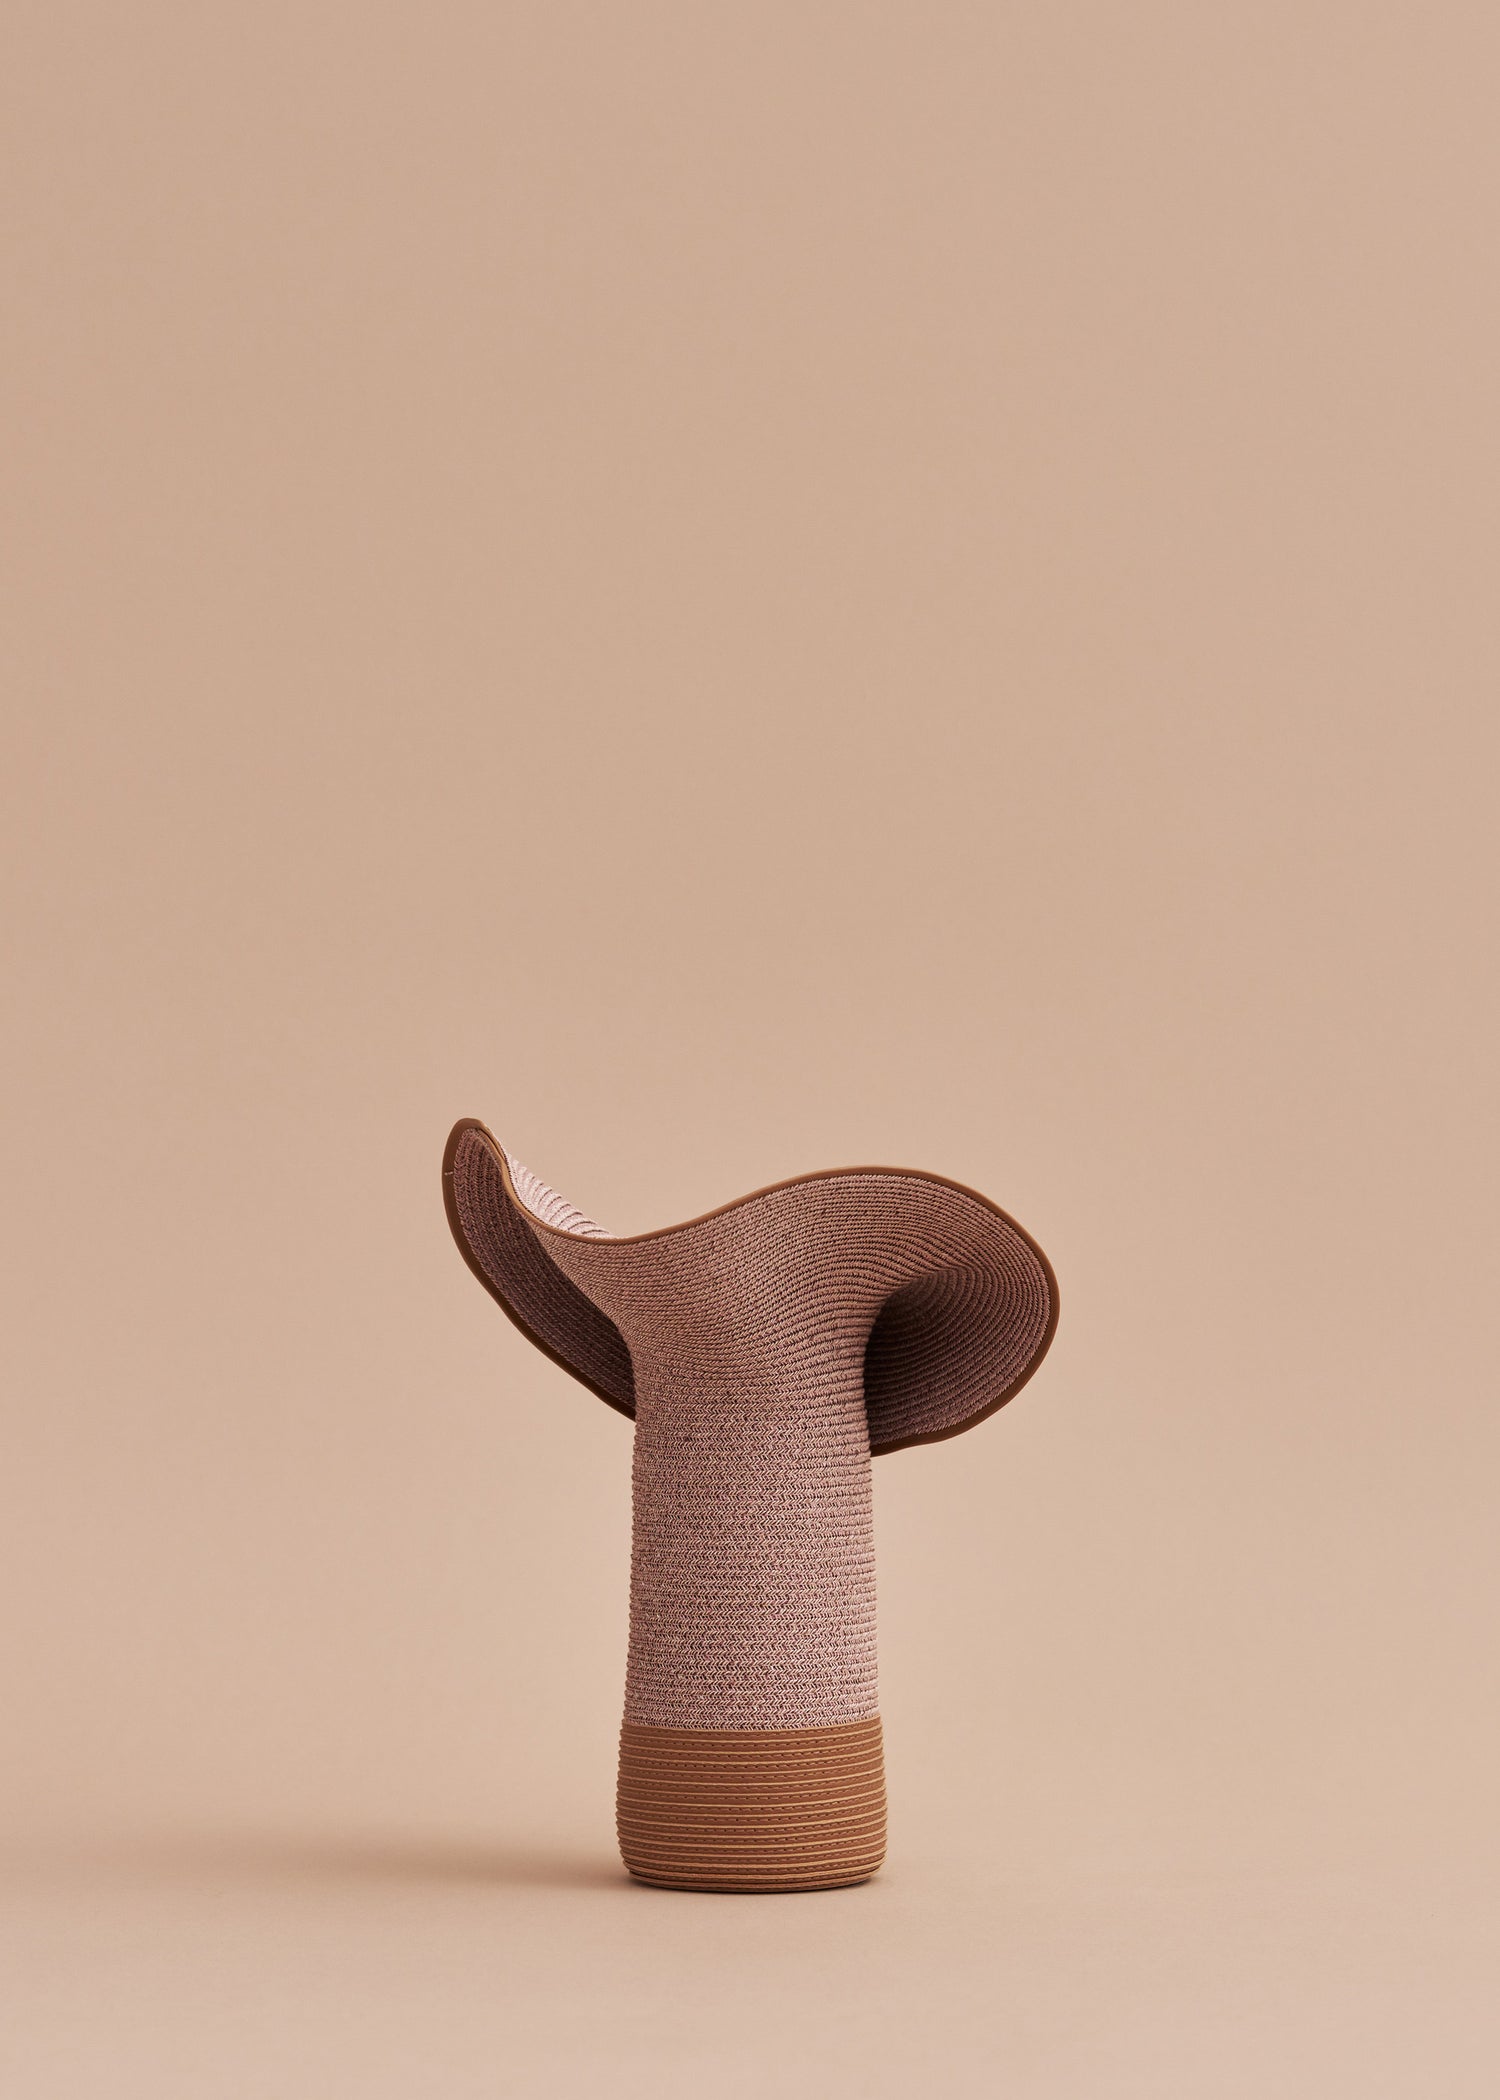 Nano Lapel Vase - Camel